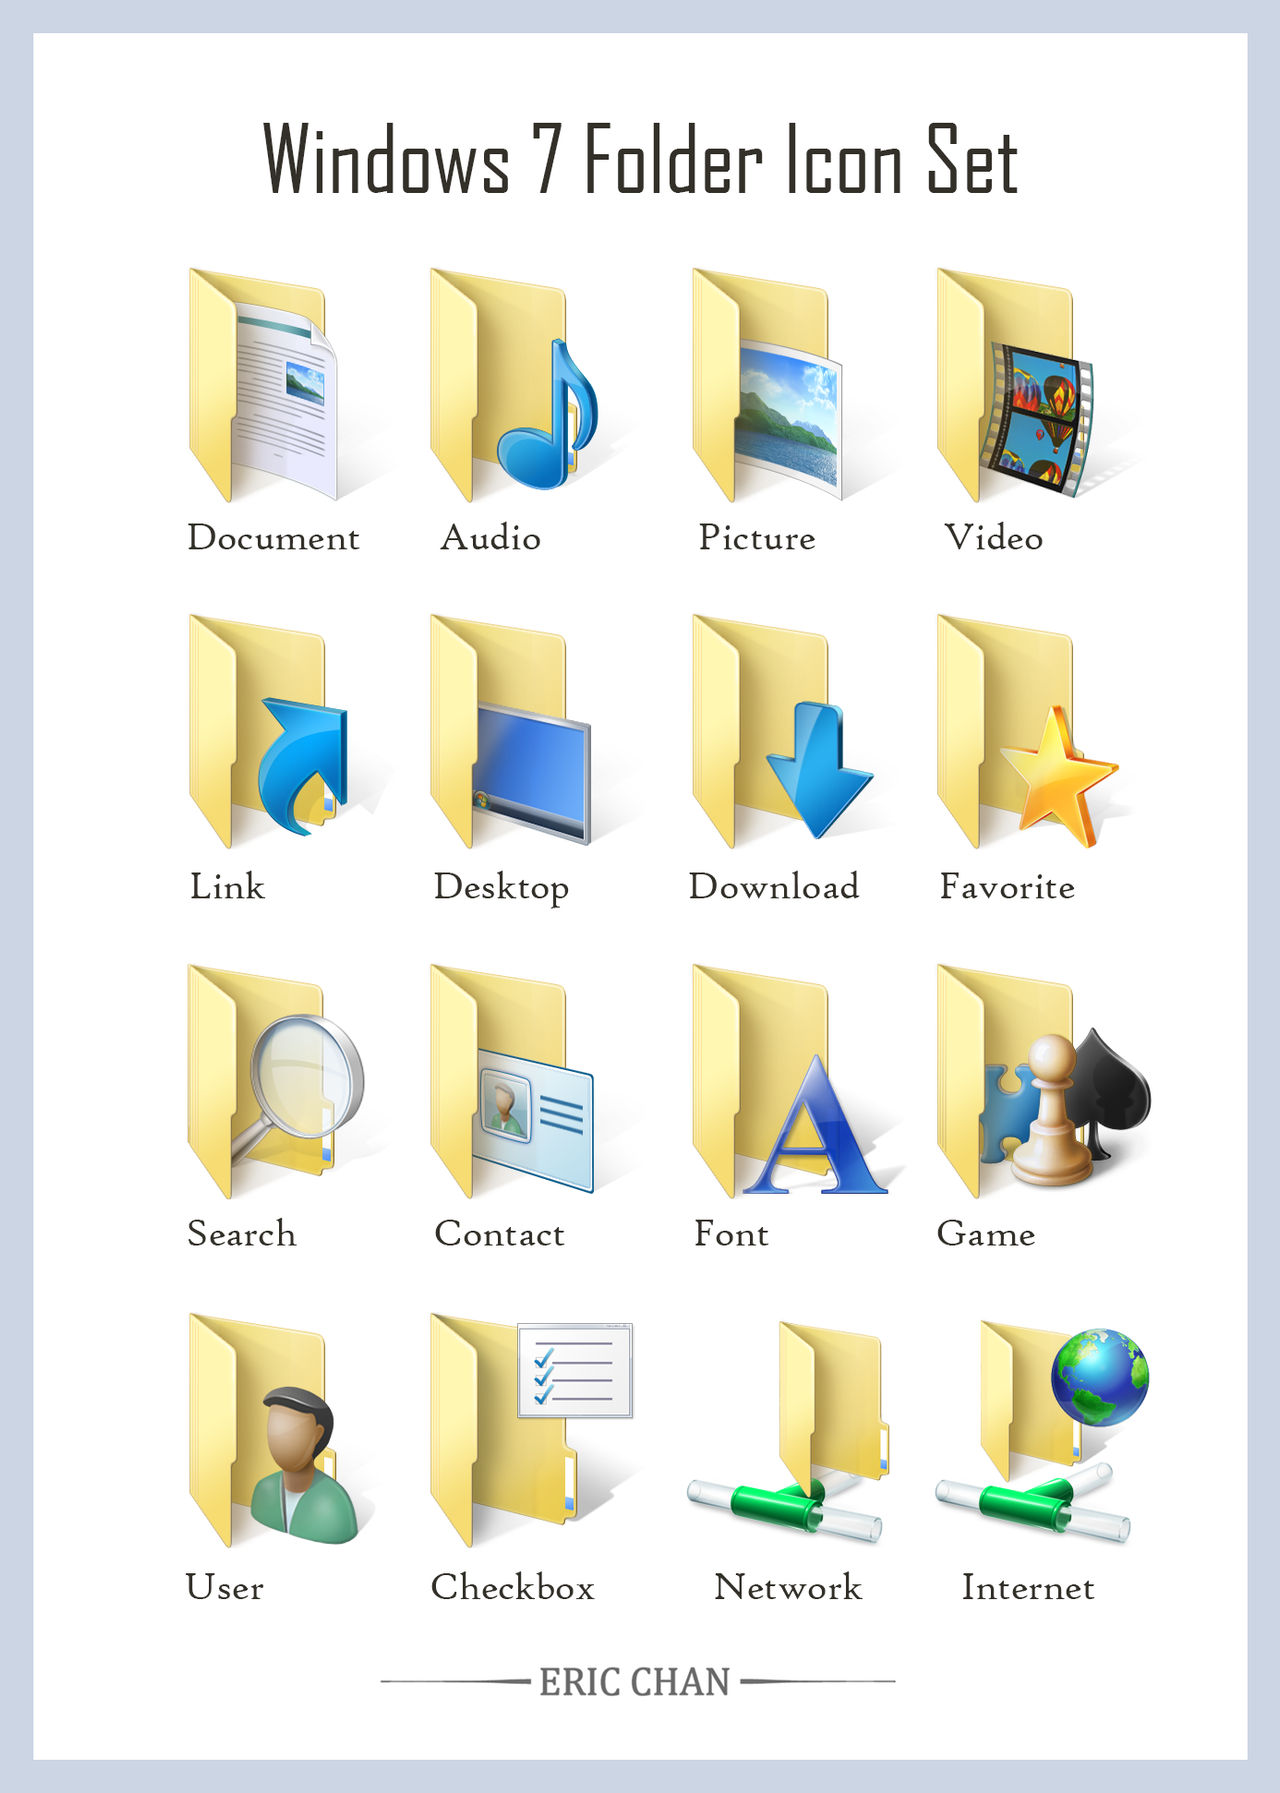 Windows 7 user folder icon set by eric2b01 on DeviantArt